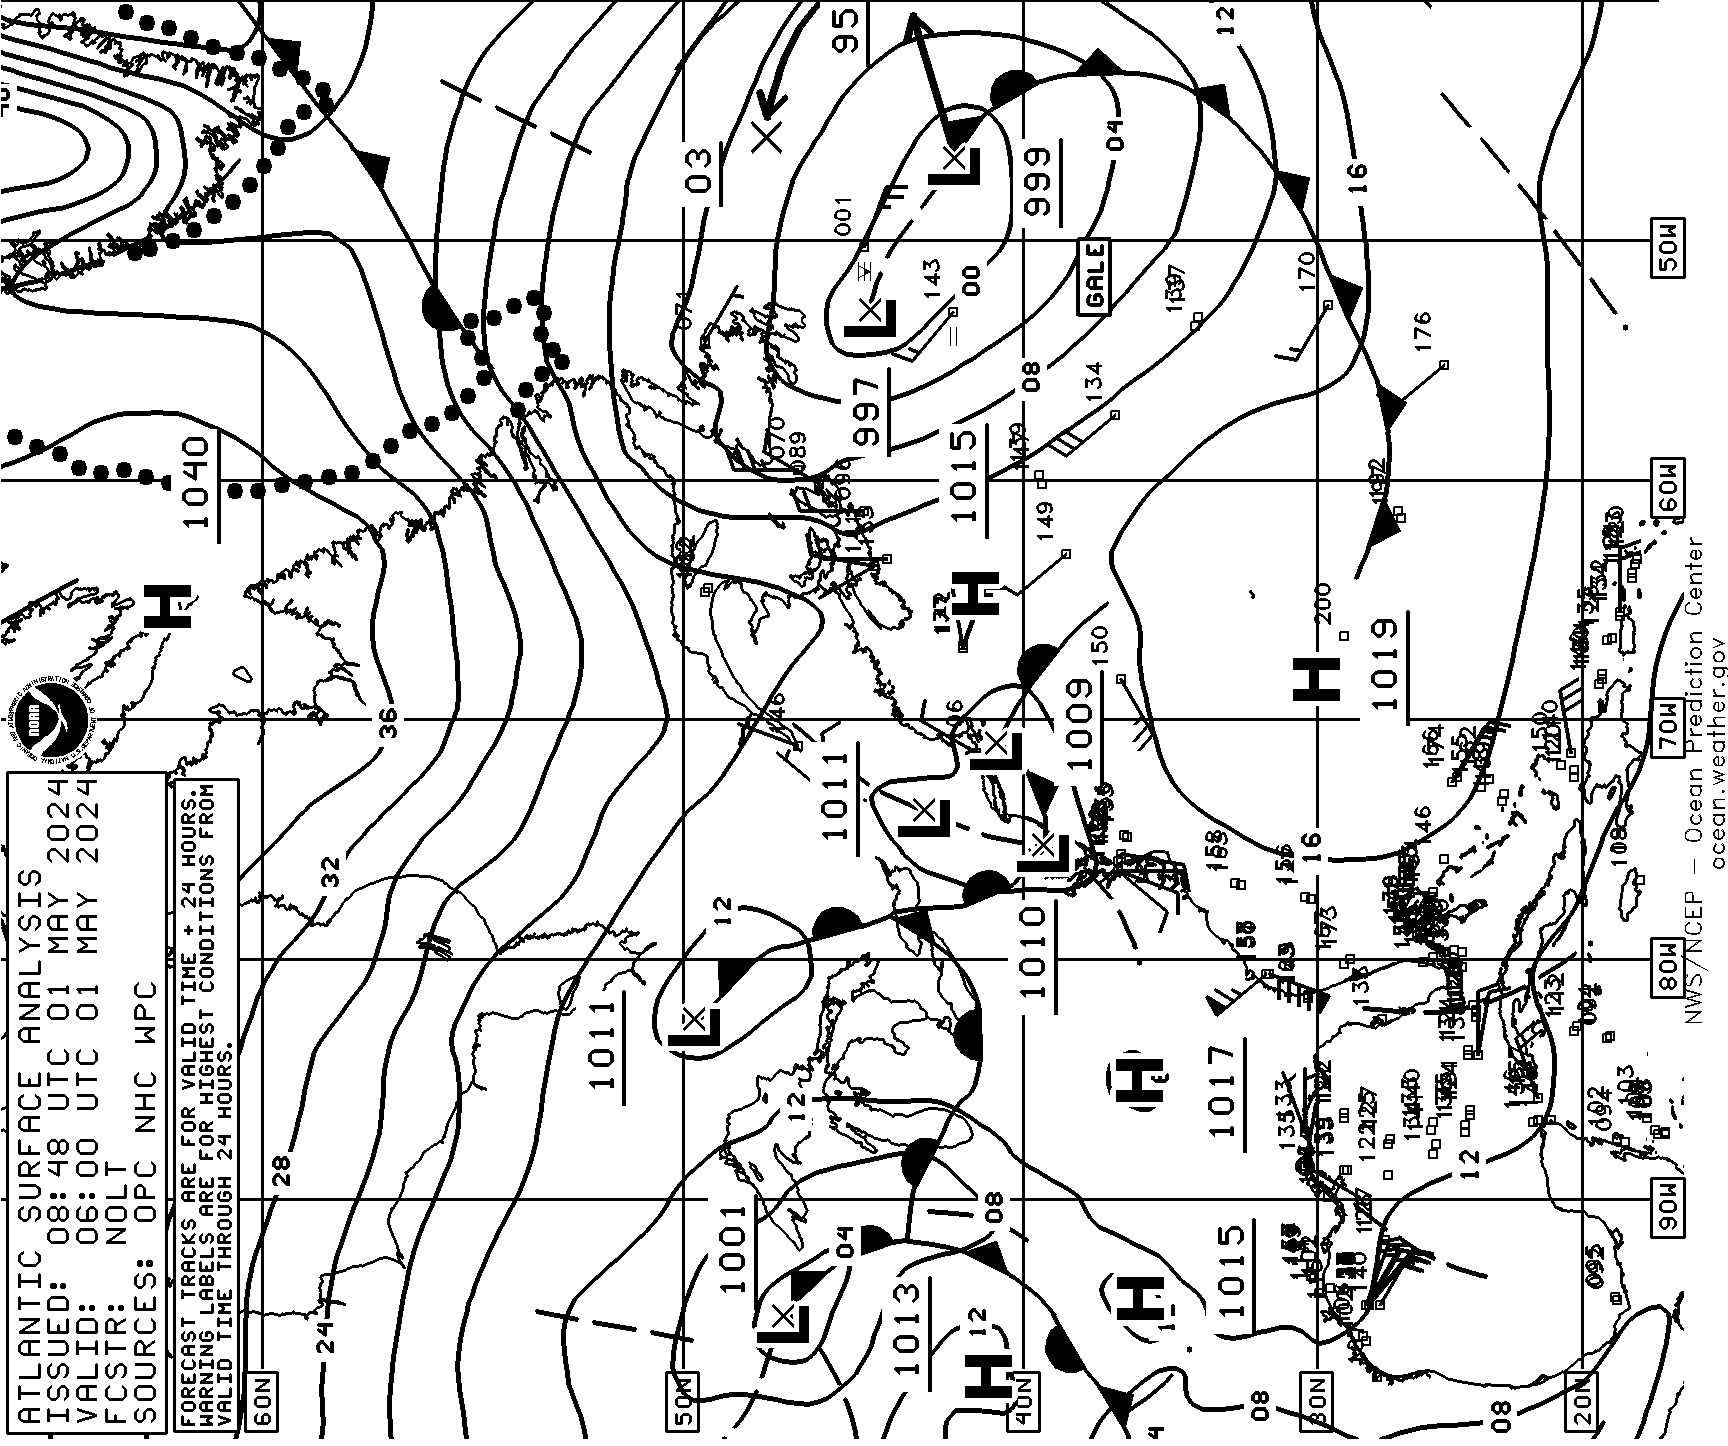 West Atlantic surface analysis 